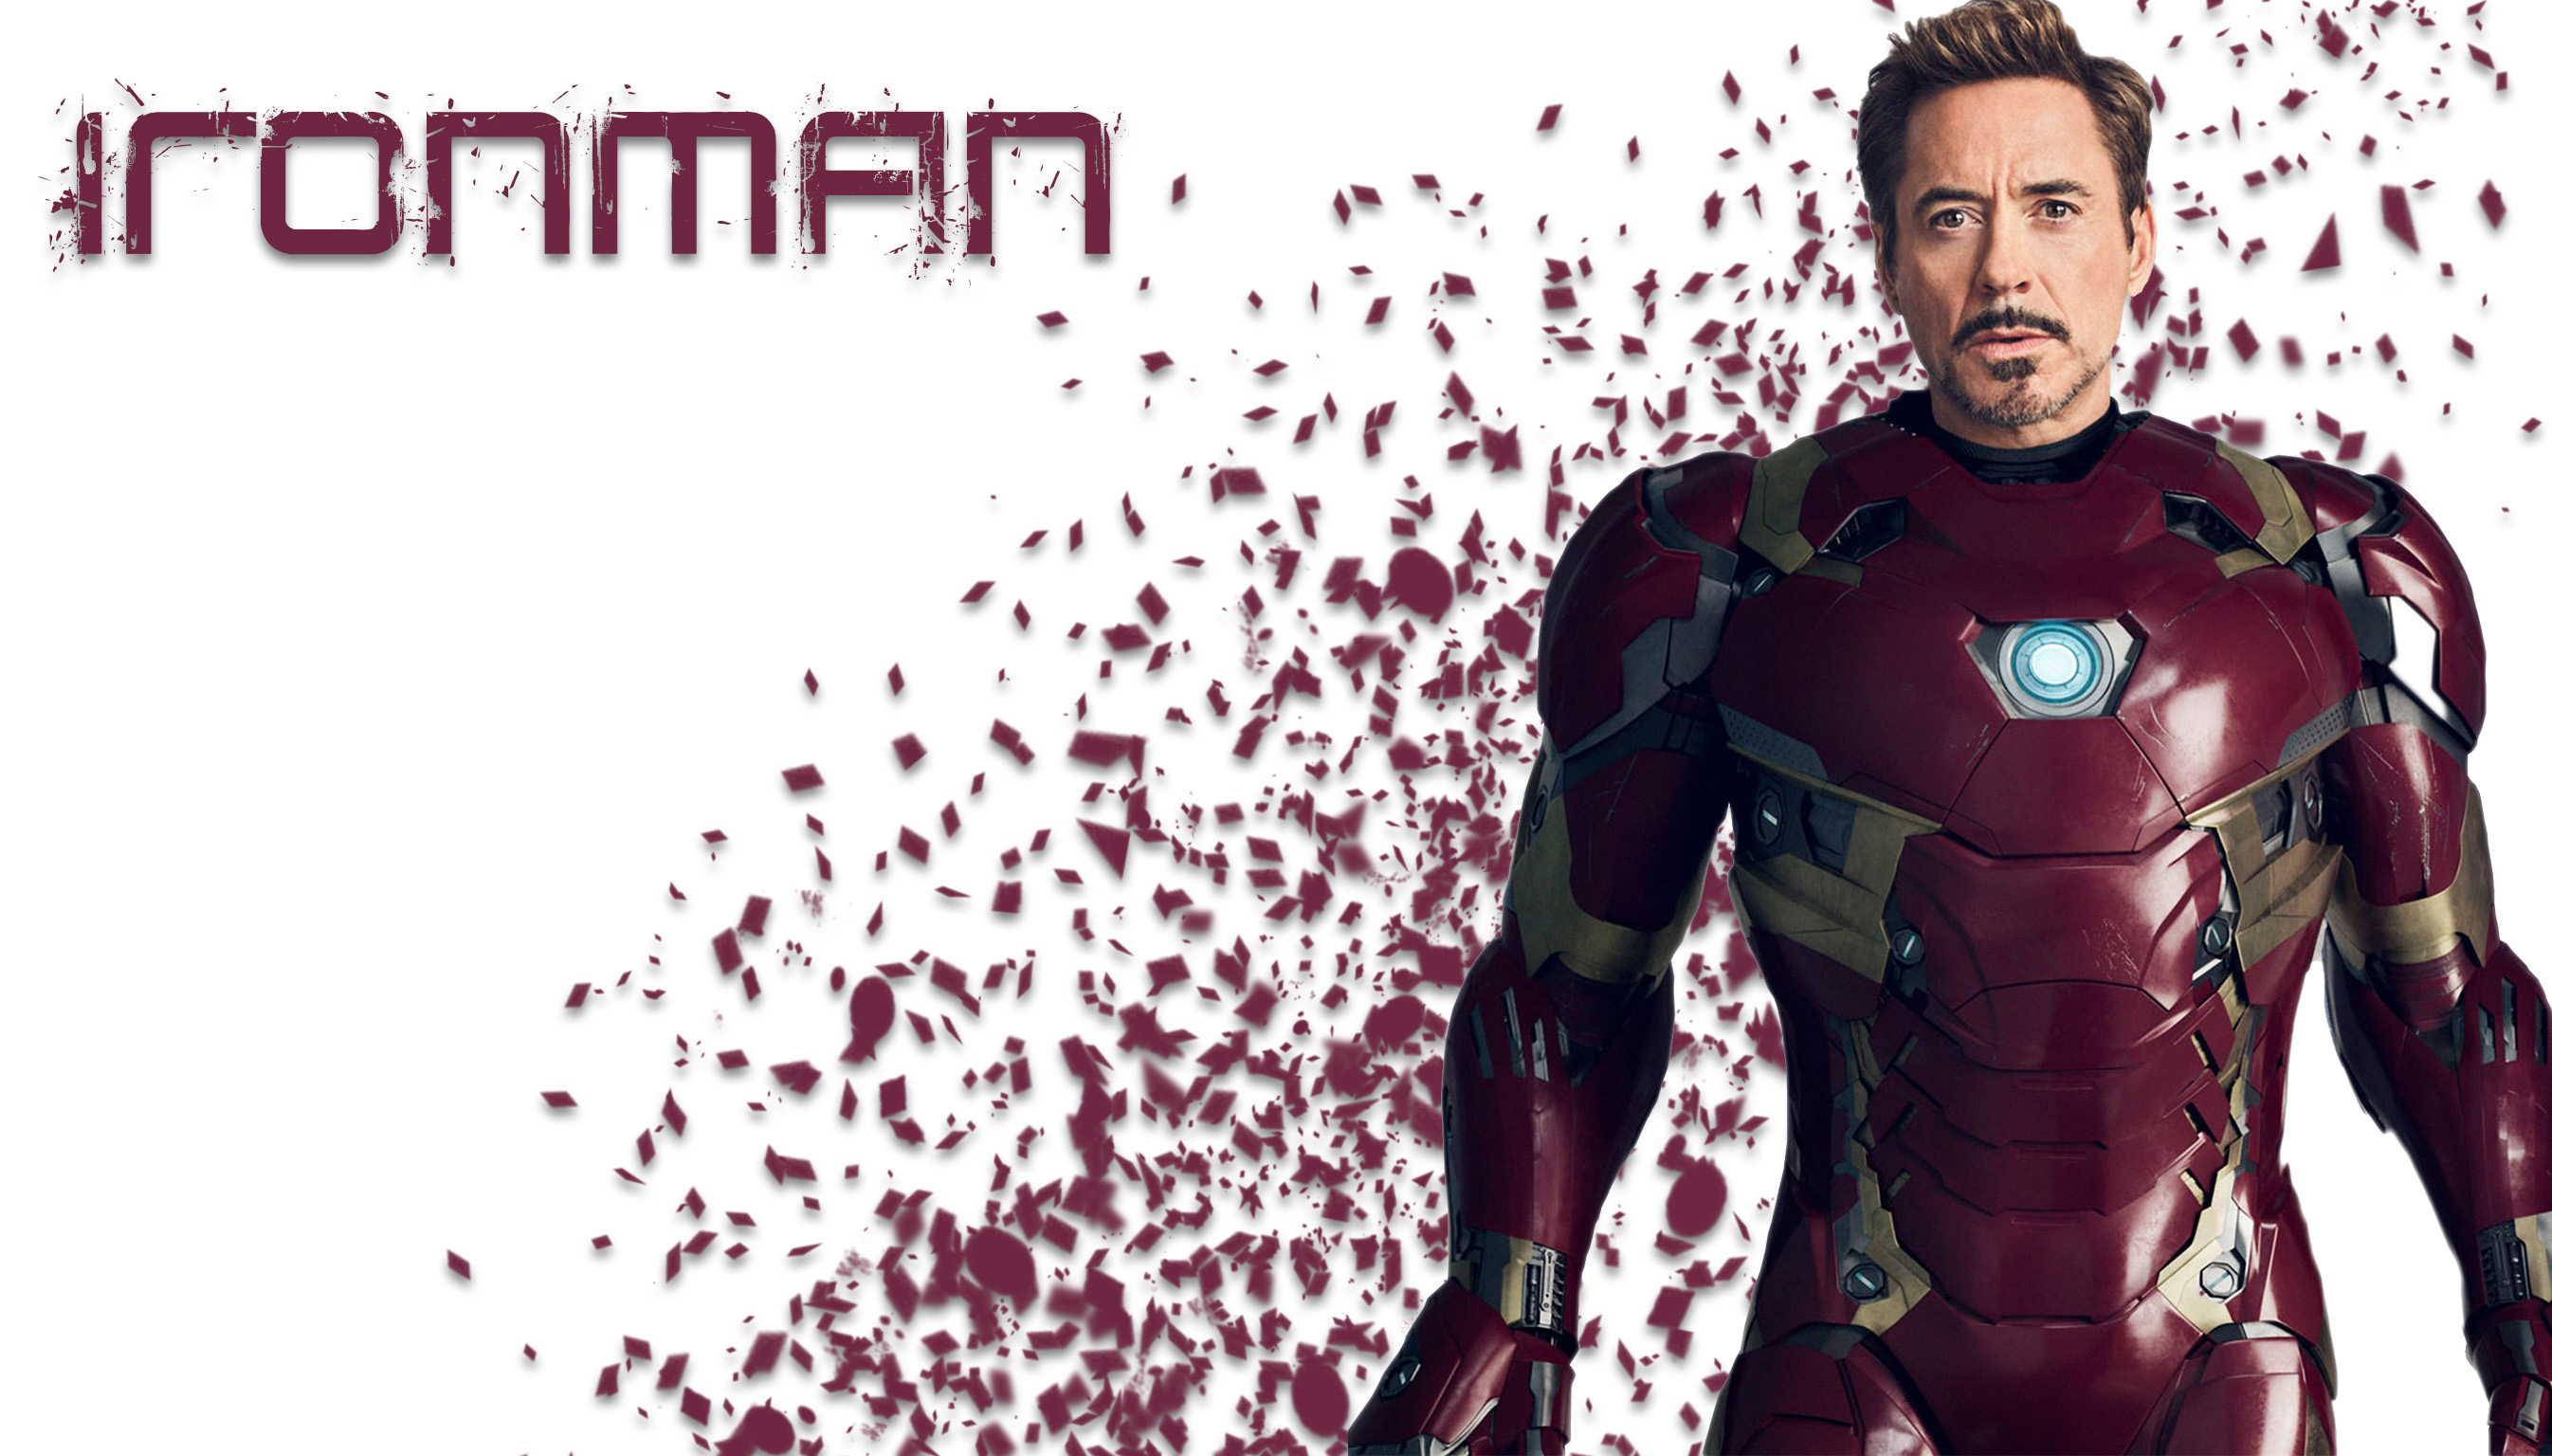 People 2692x1536 Avengers: Infinity war Iron Man Robert Downey Jr. The Avengers Marvel Comics actor men simple background digital art